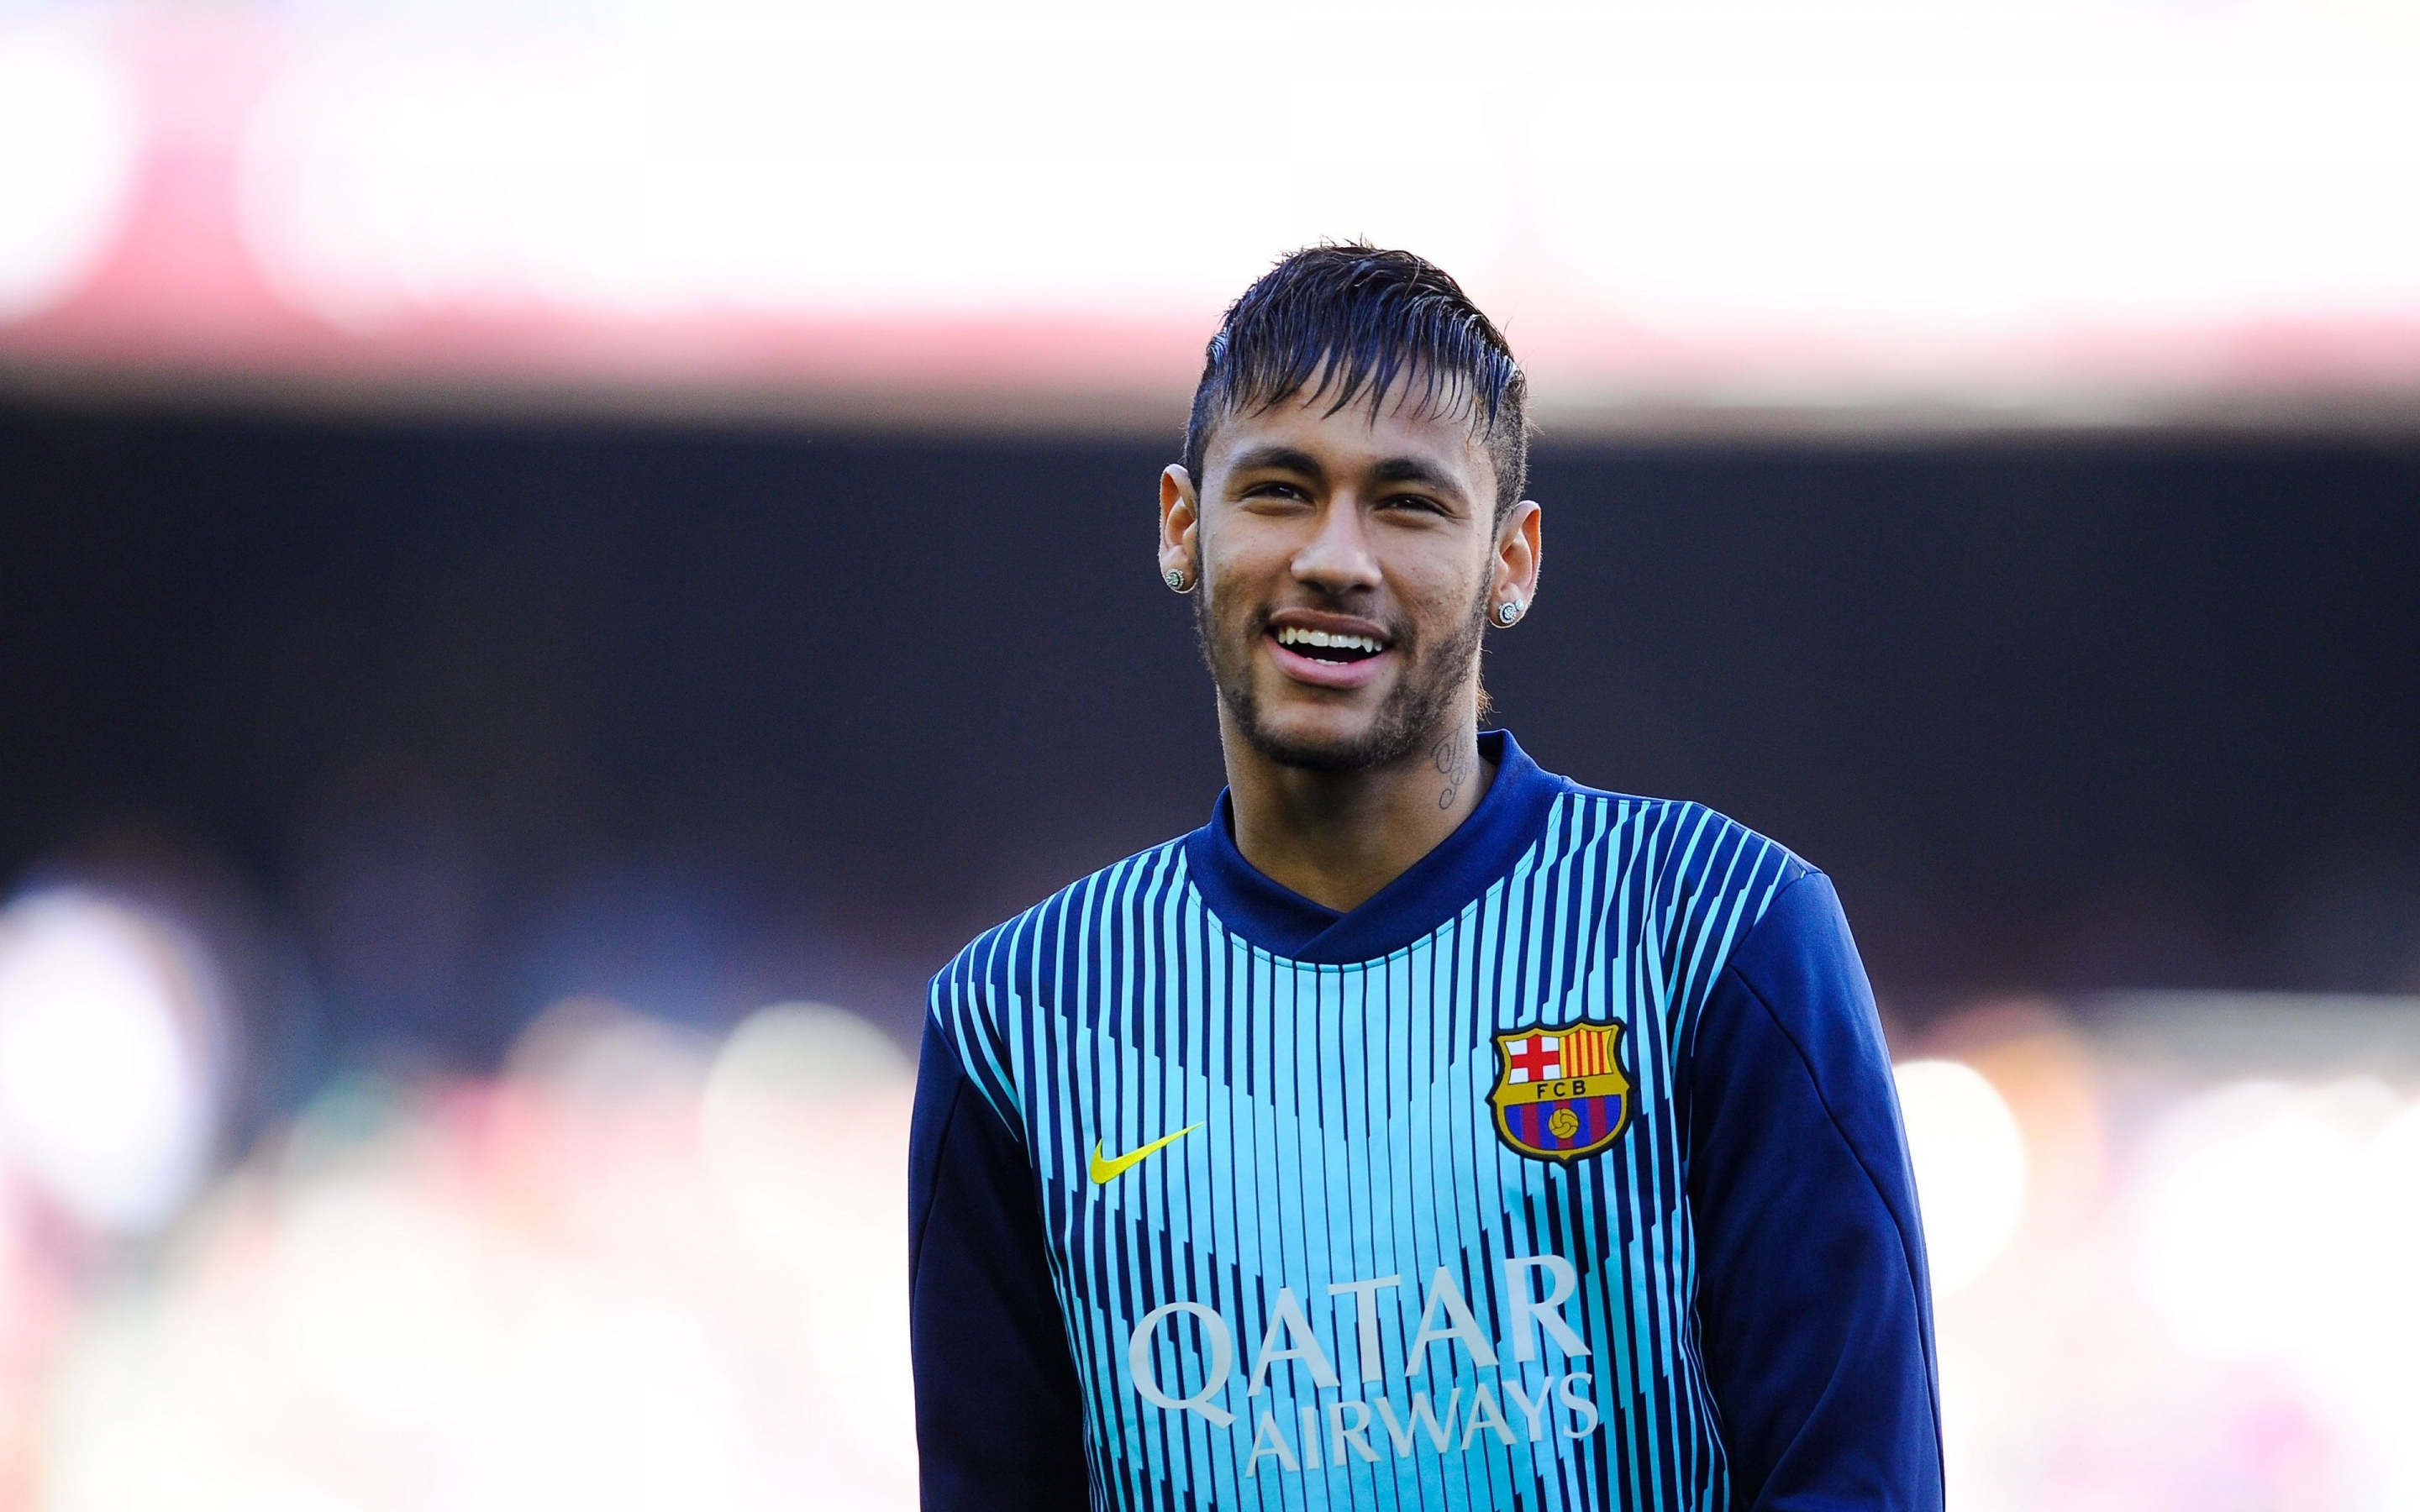 Neymar Training for 2880 x 1800 Retina Display resolution